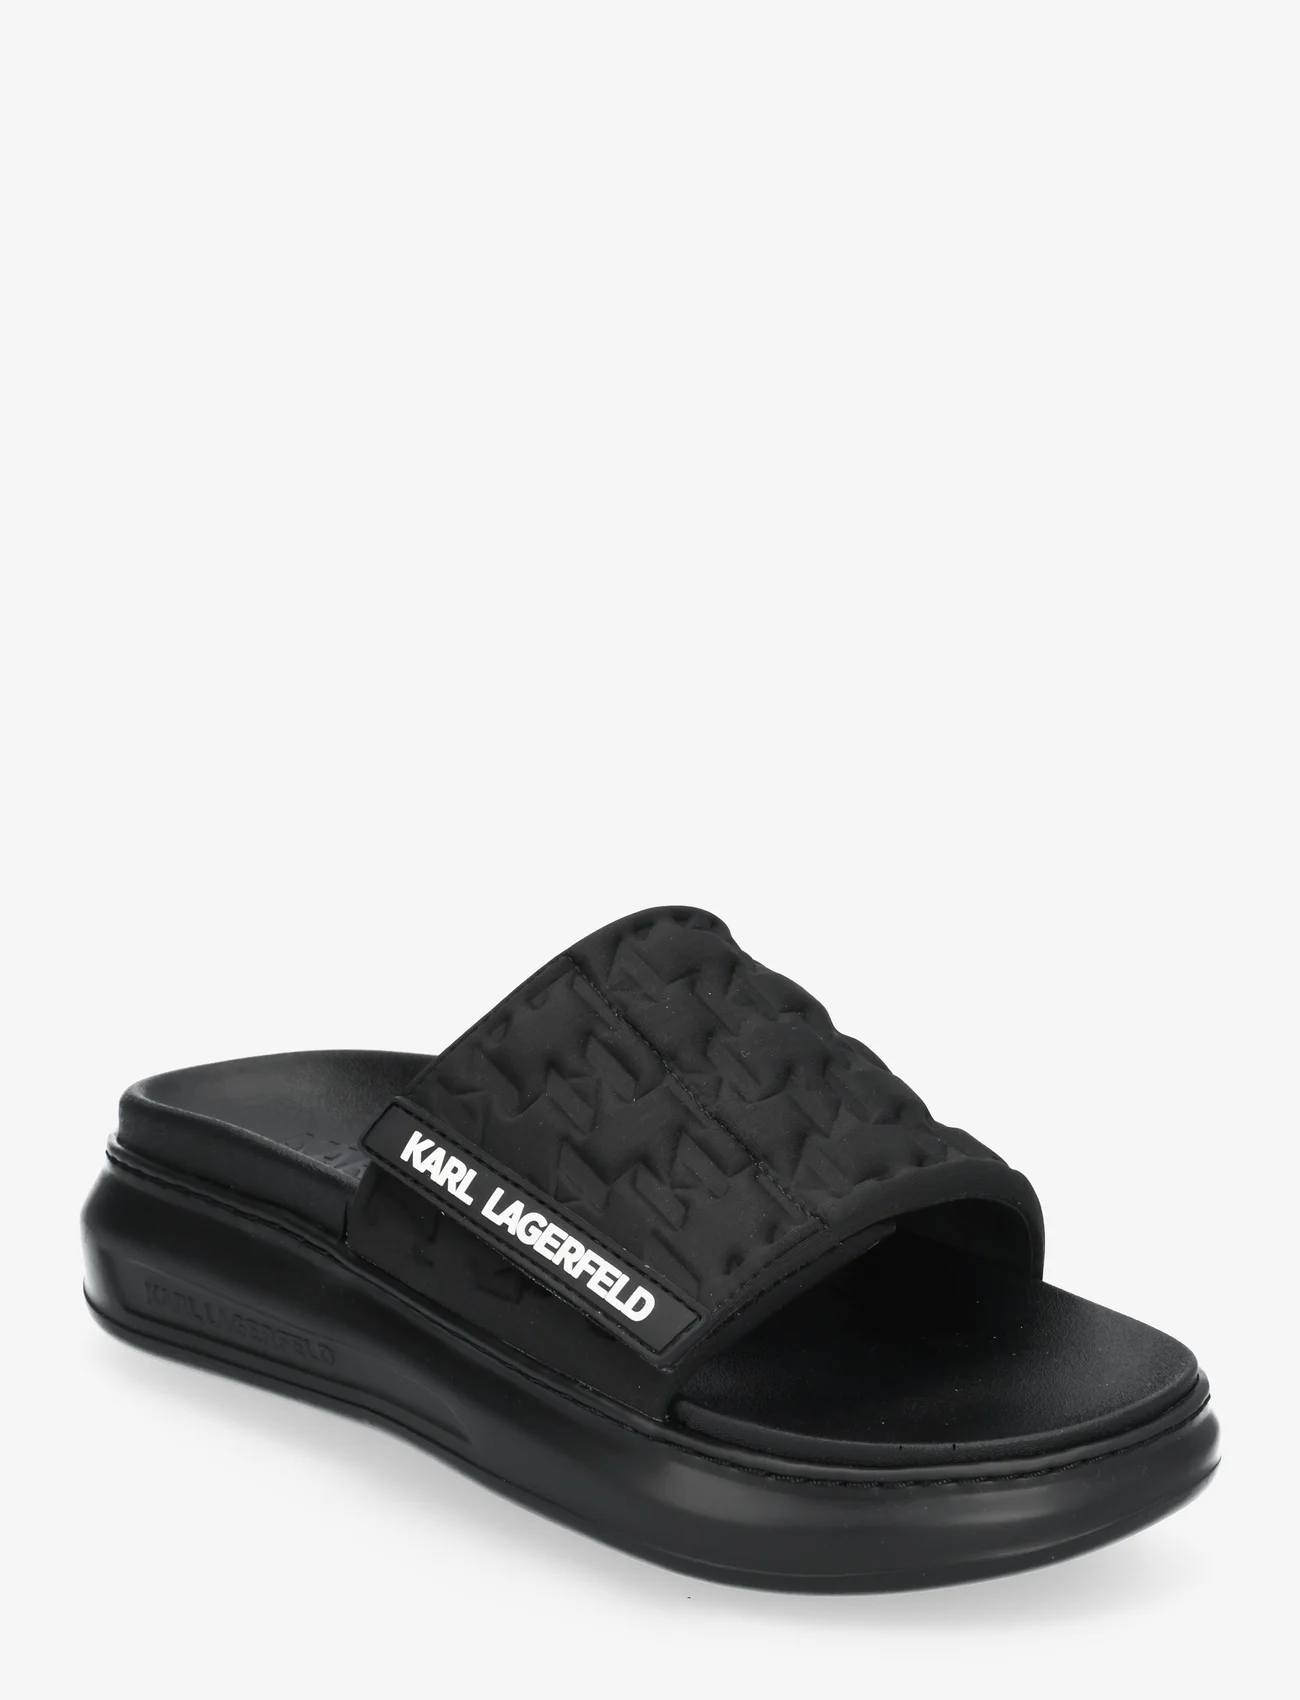 Karl Lagerfeld Shoes - KAPRI - shoes - black satin textile - 0